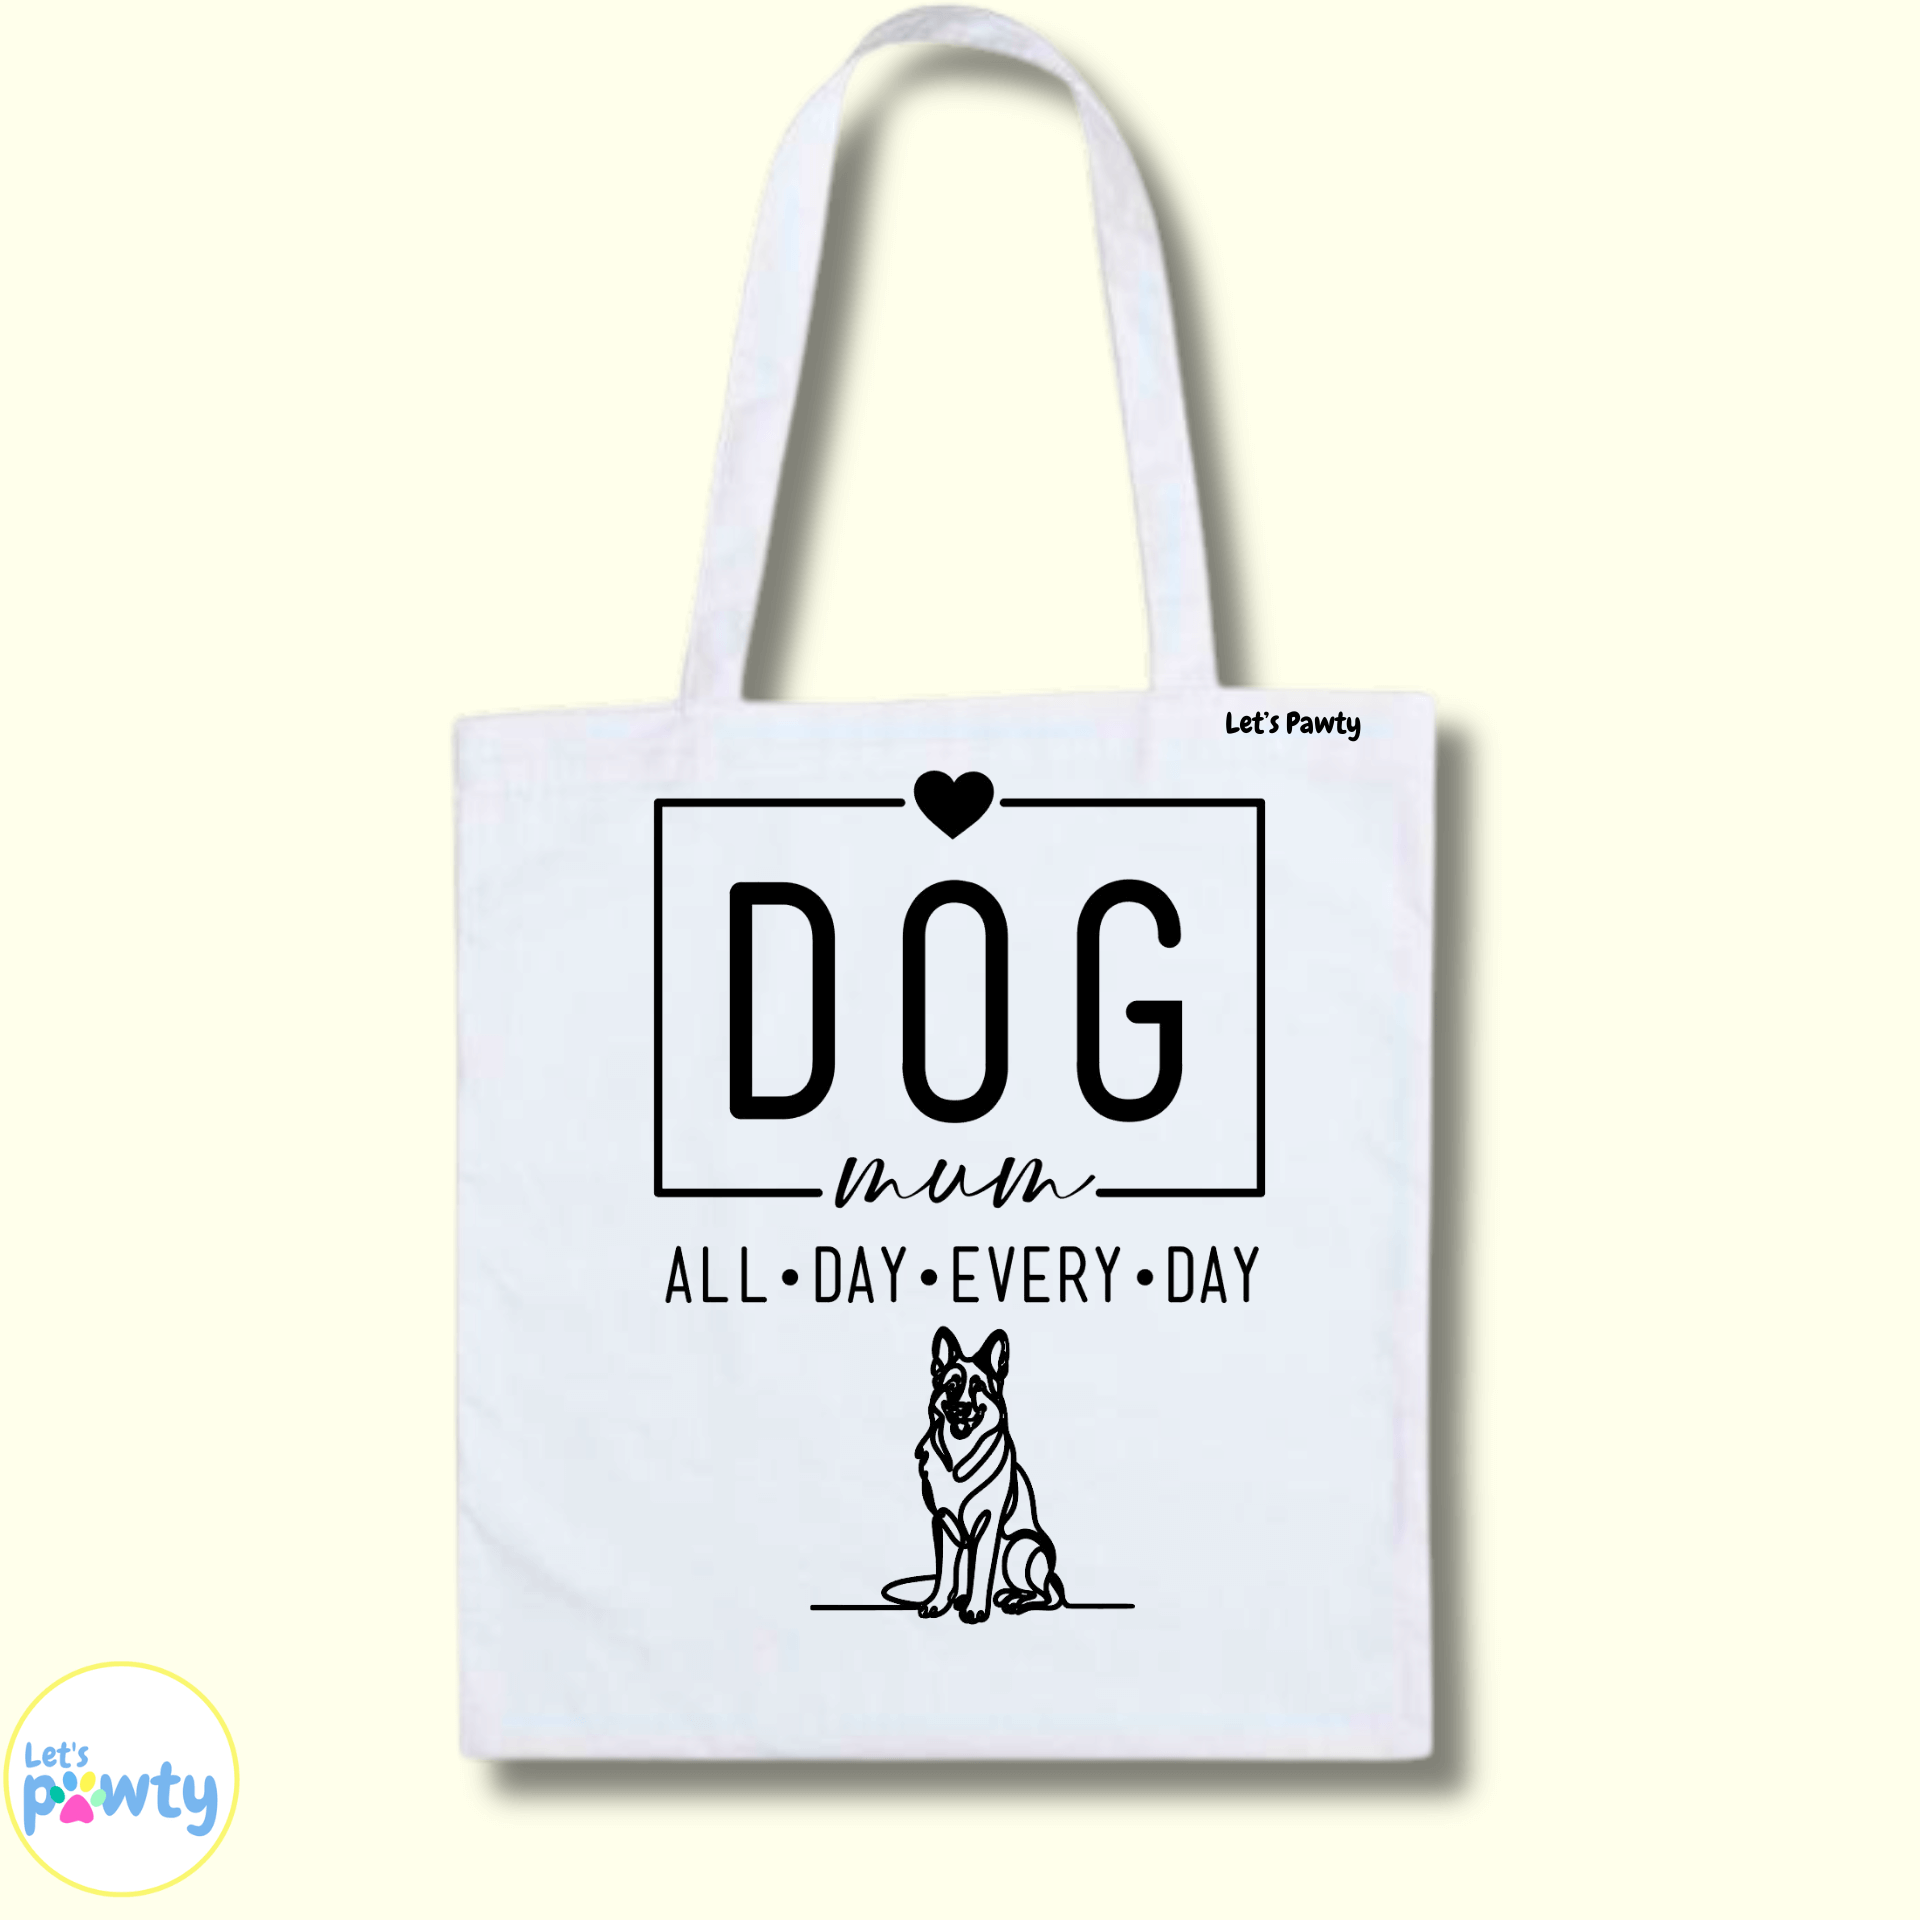 German shepherd dog mum tote bag